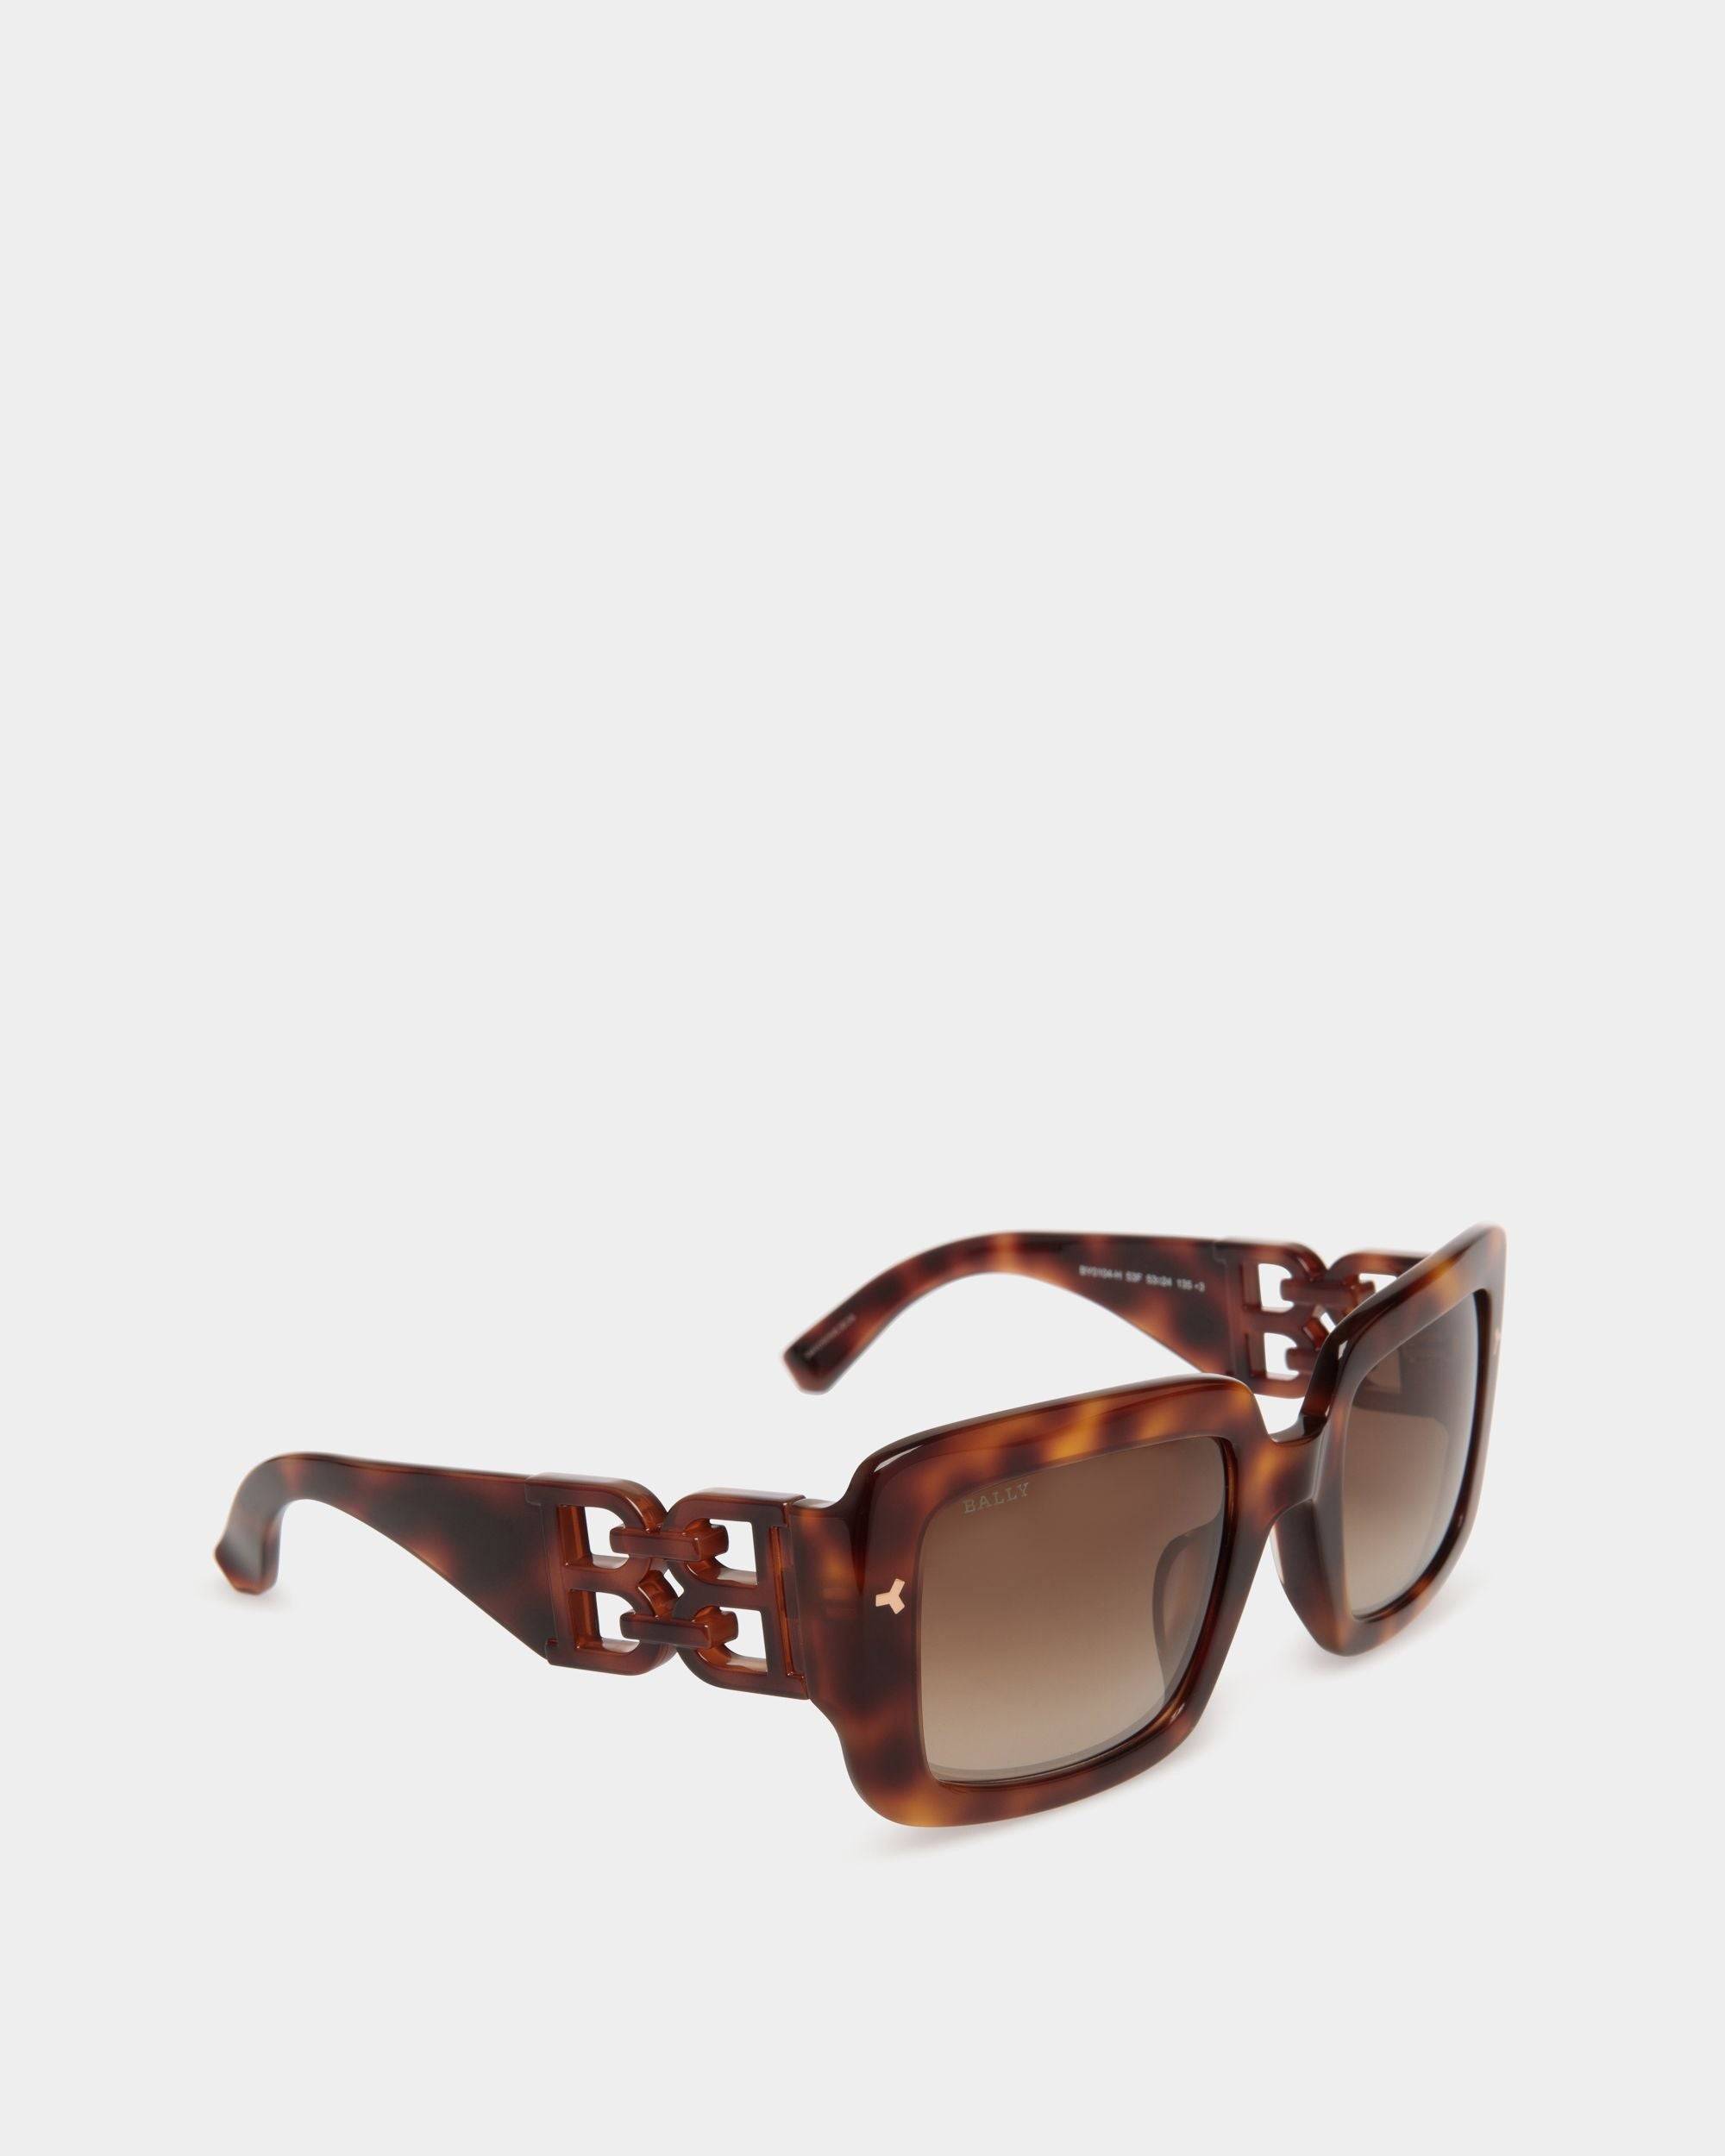 Filiana Sunglasses in Havana Brown & Gradient Brown Lenses Acetate Sunglasses In Havana Brown - Women's - Bally - 03